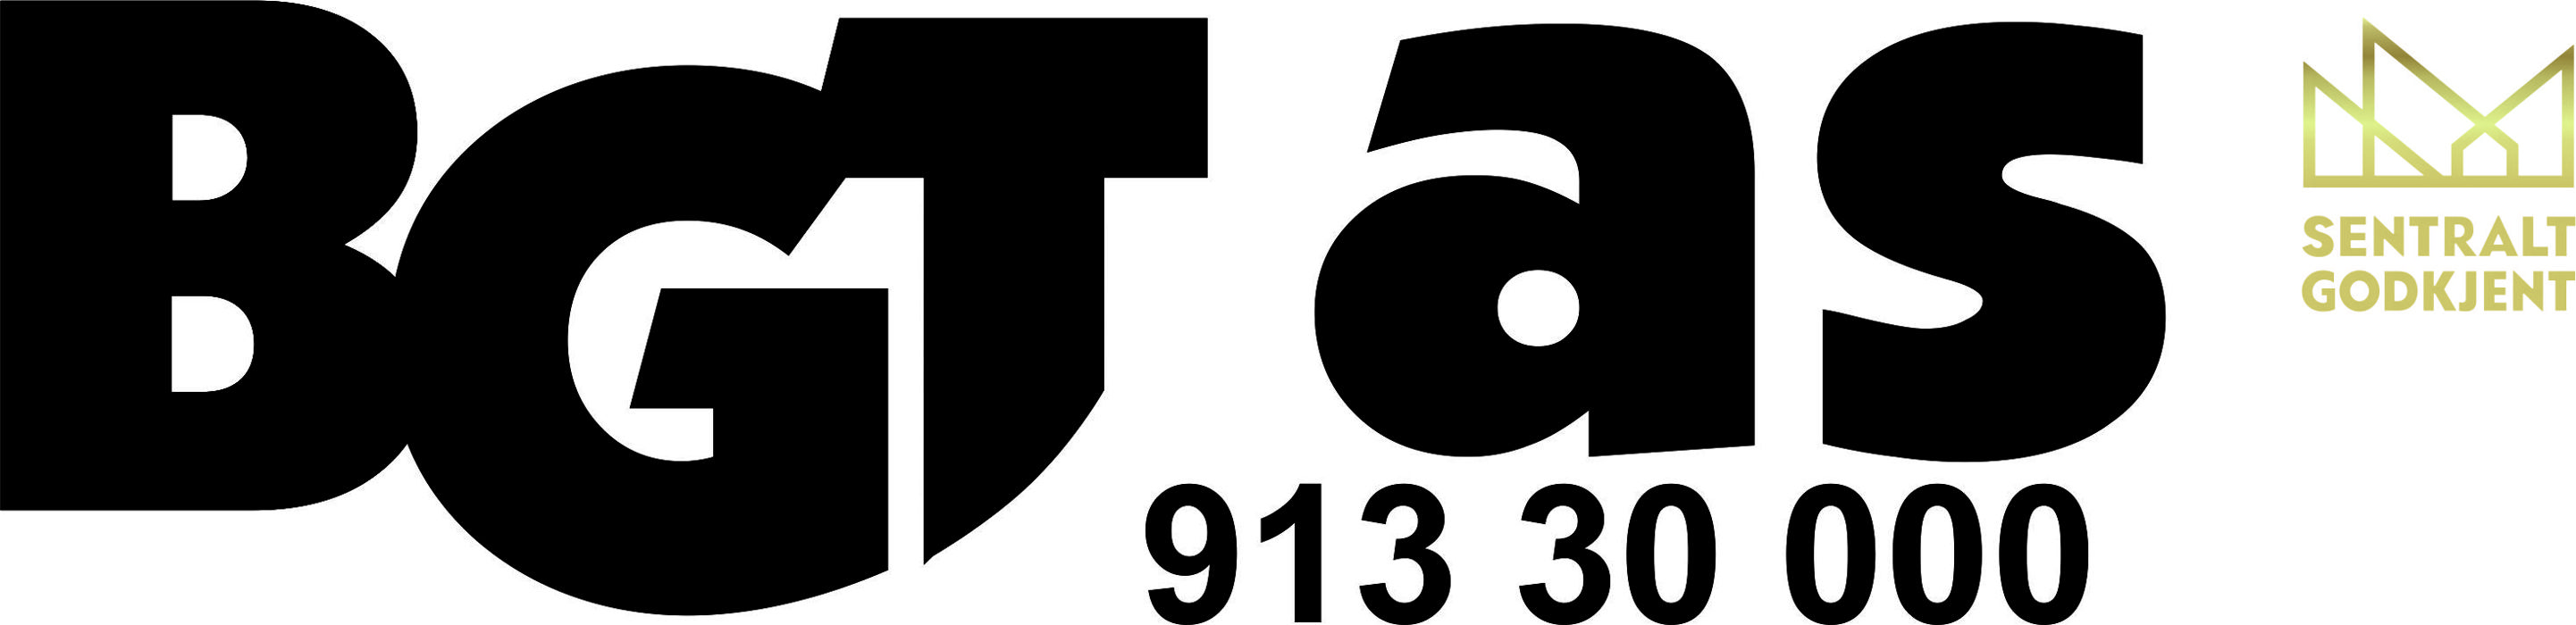 BGT AS logo.jpg